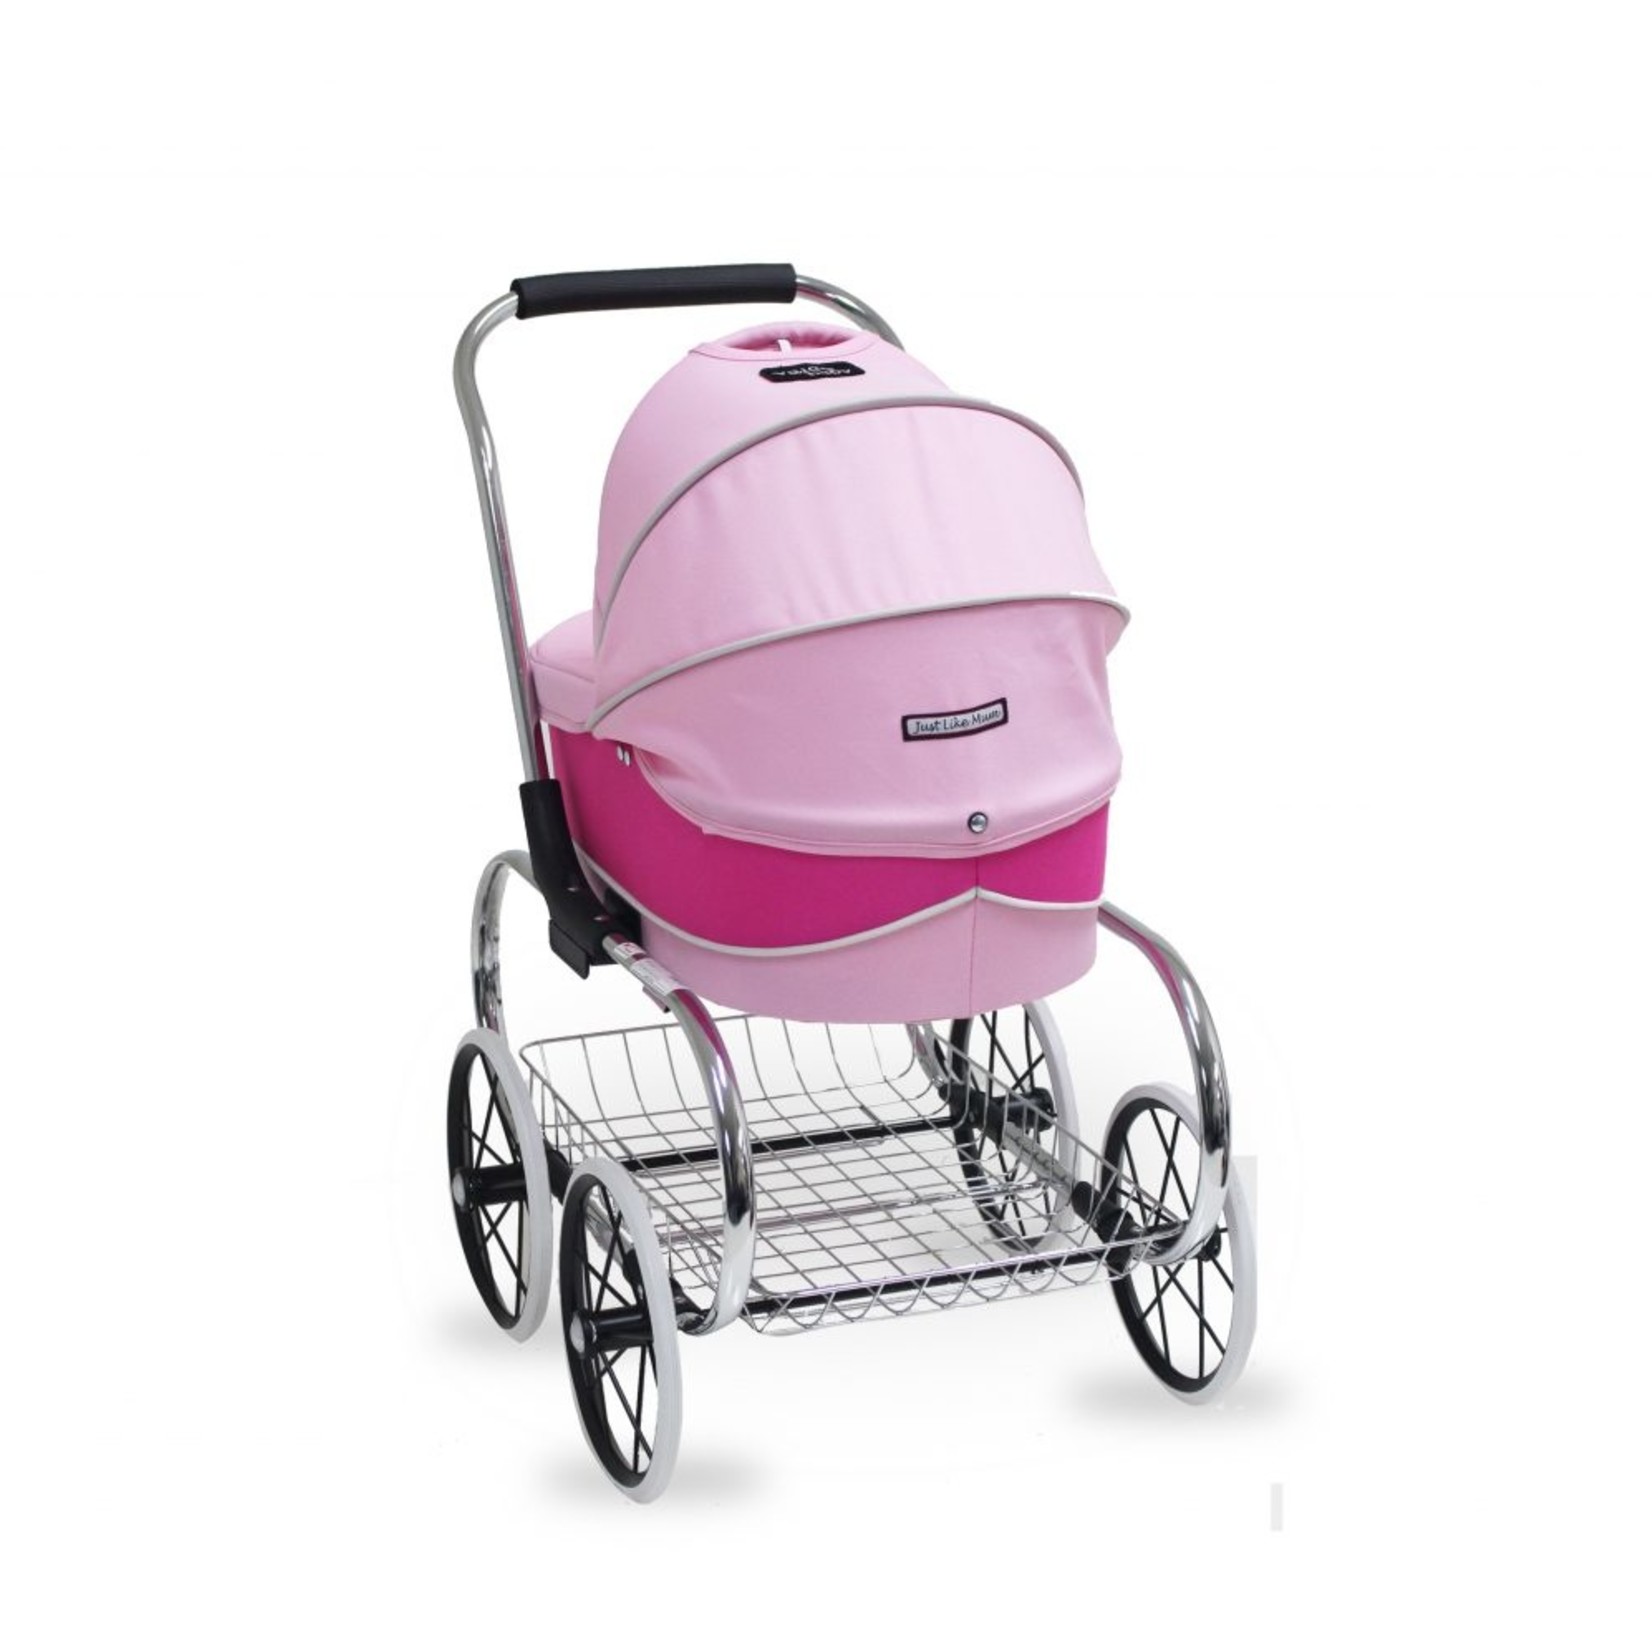 Valco Baby Princess doll stroller-hot pink